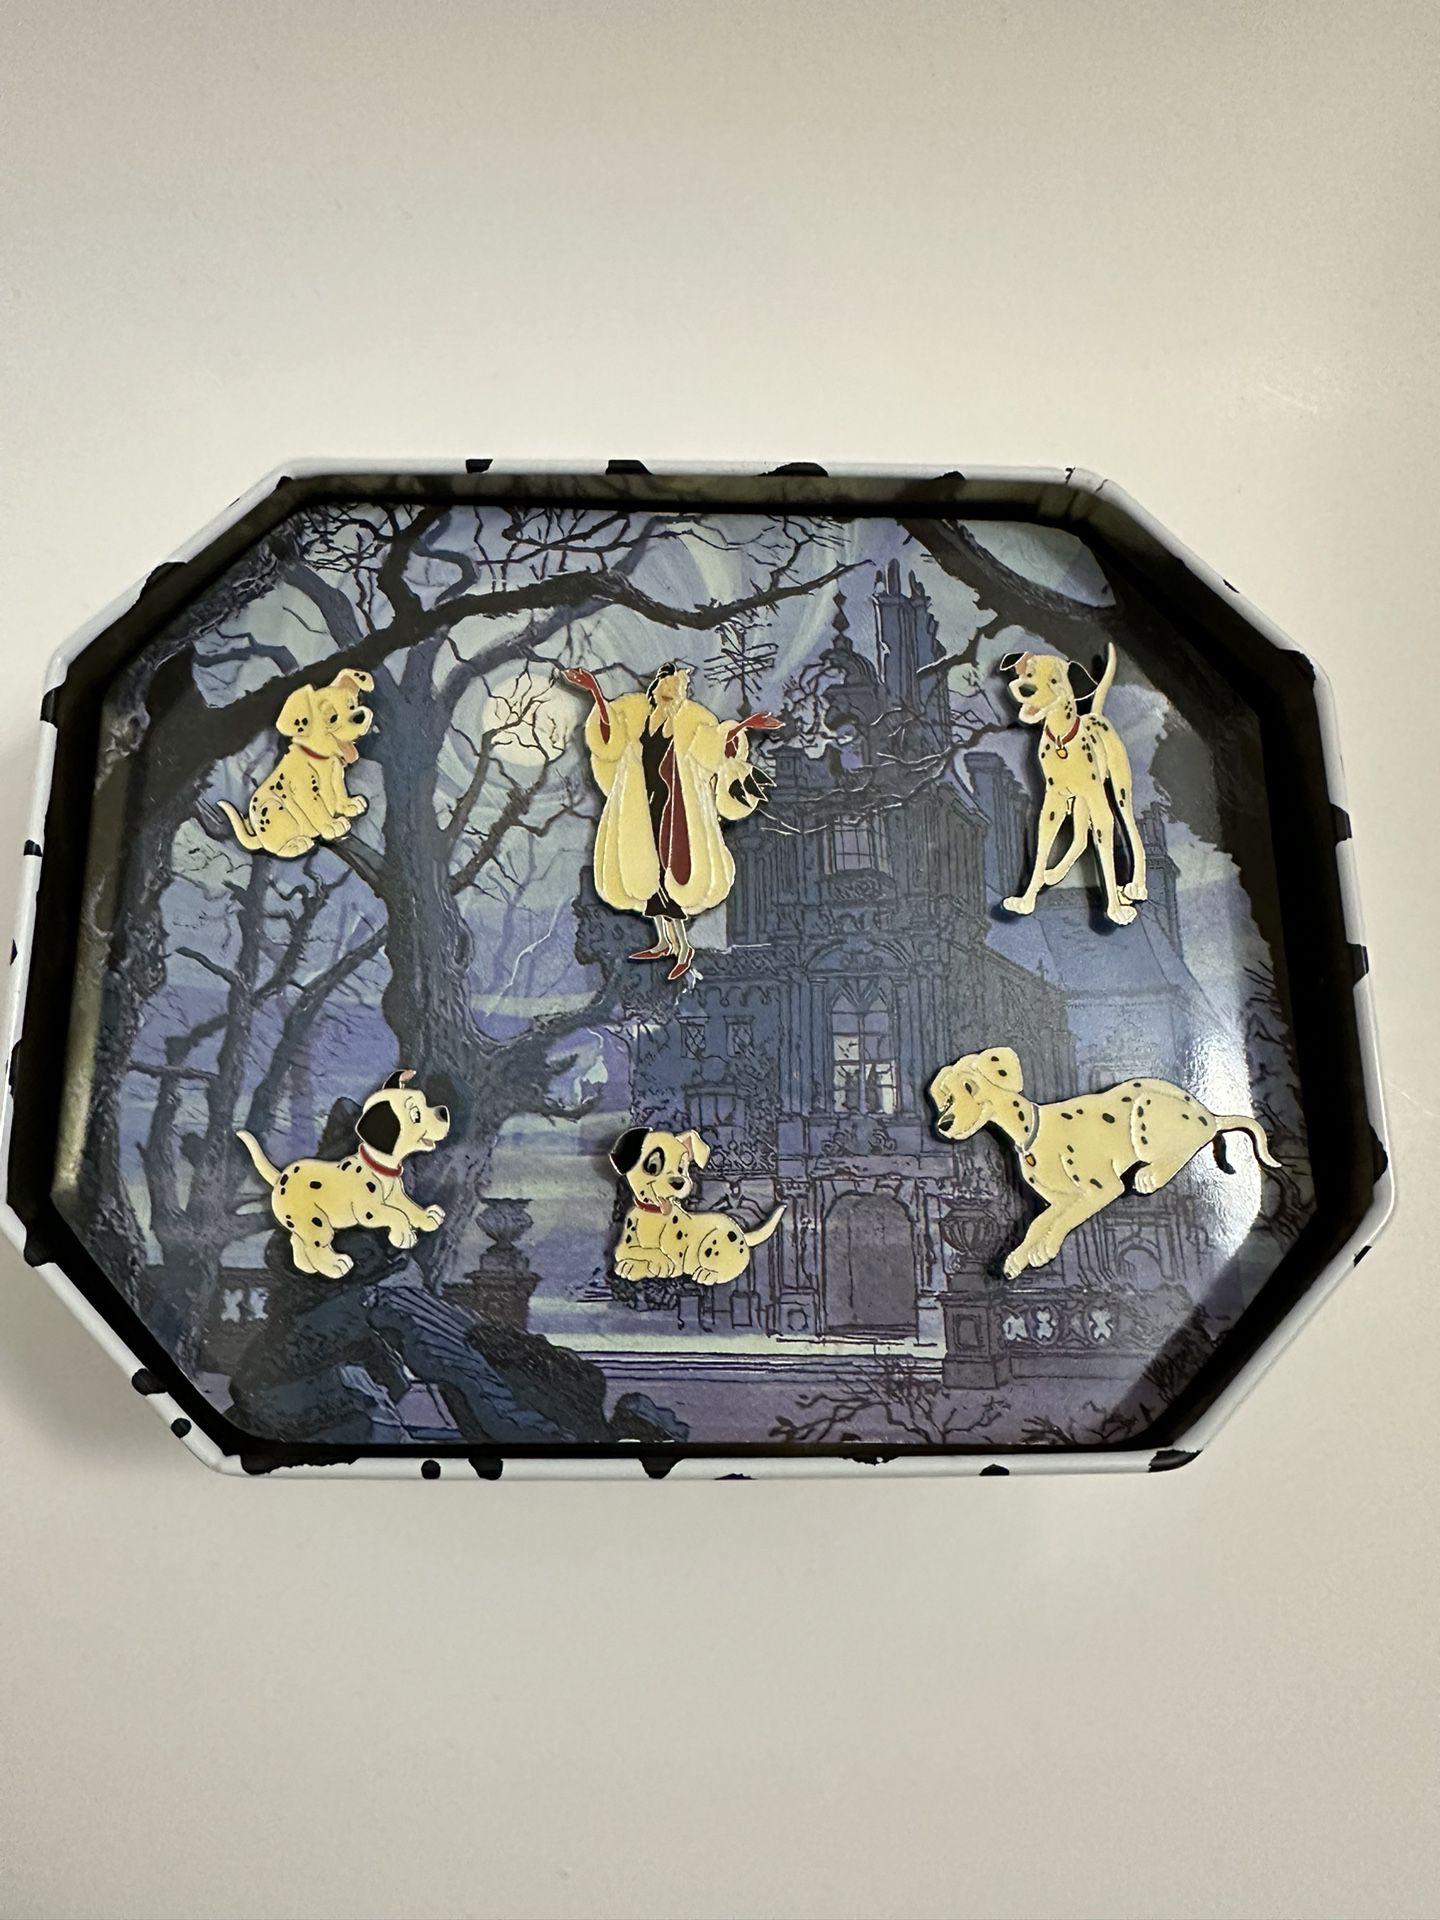 Disney 101 Dalmatians Commemorative Pin Set in Tin Box - New